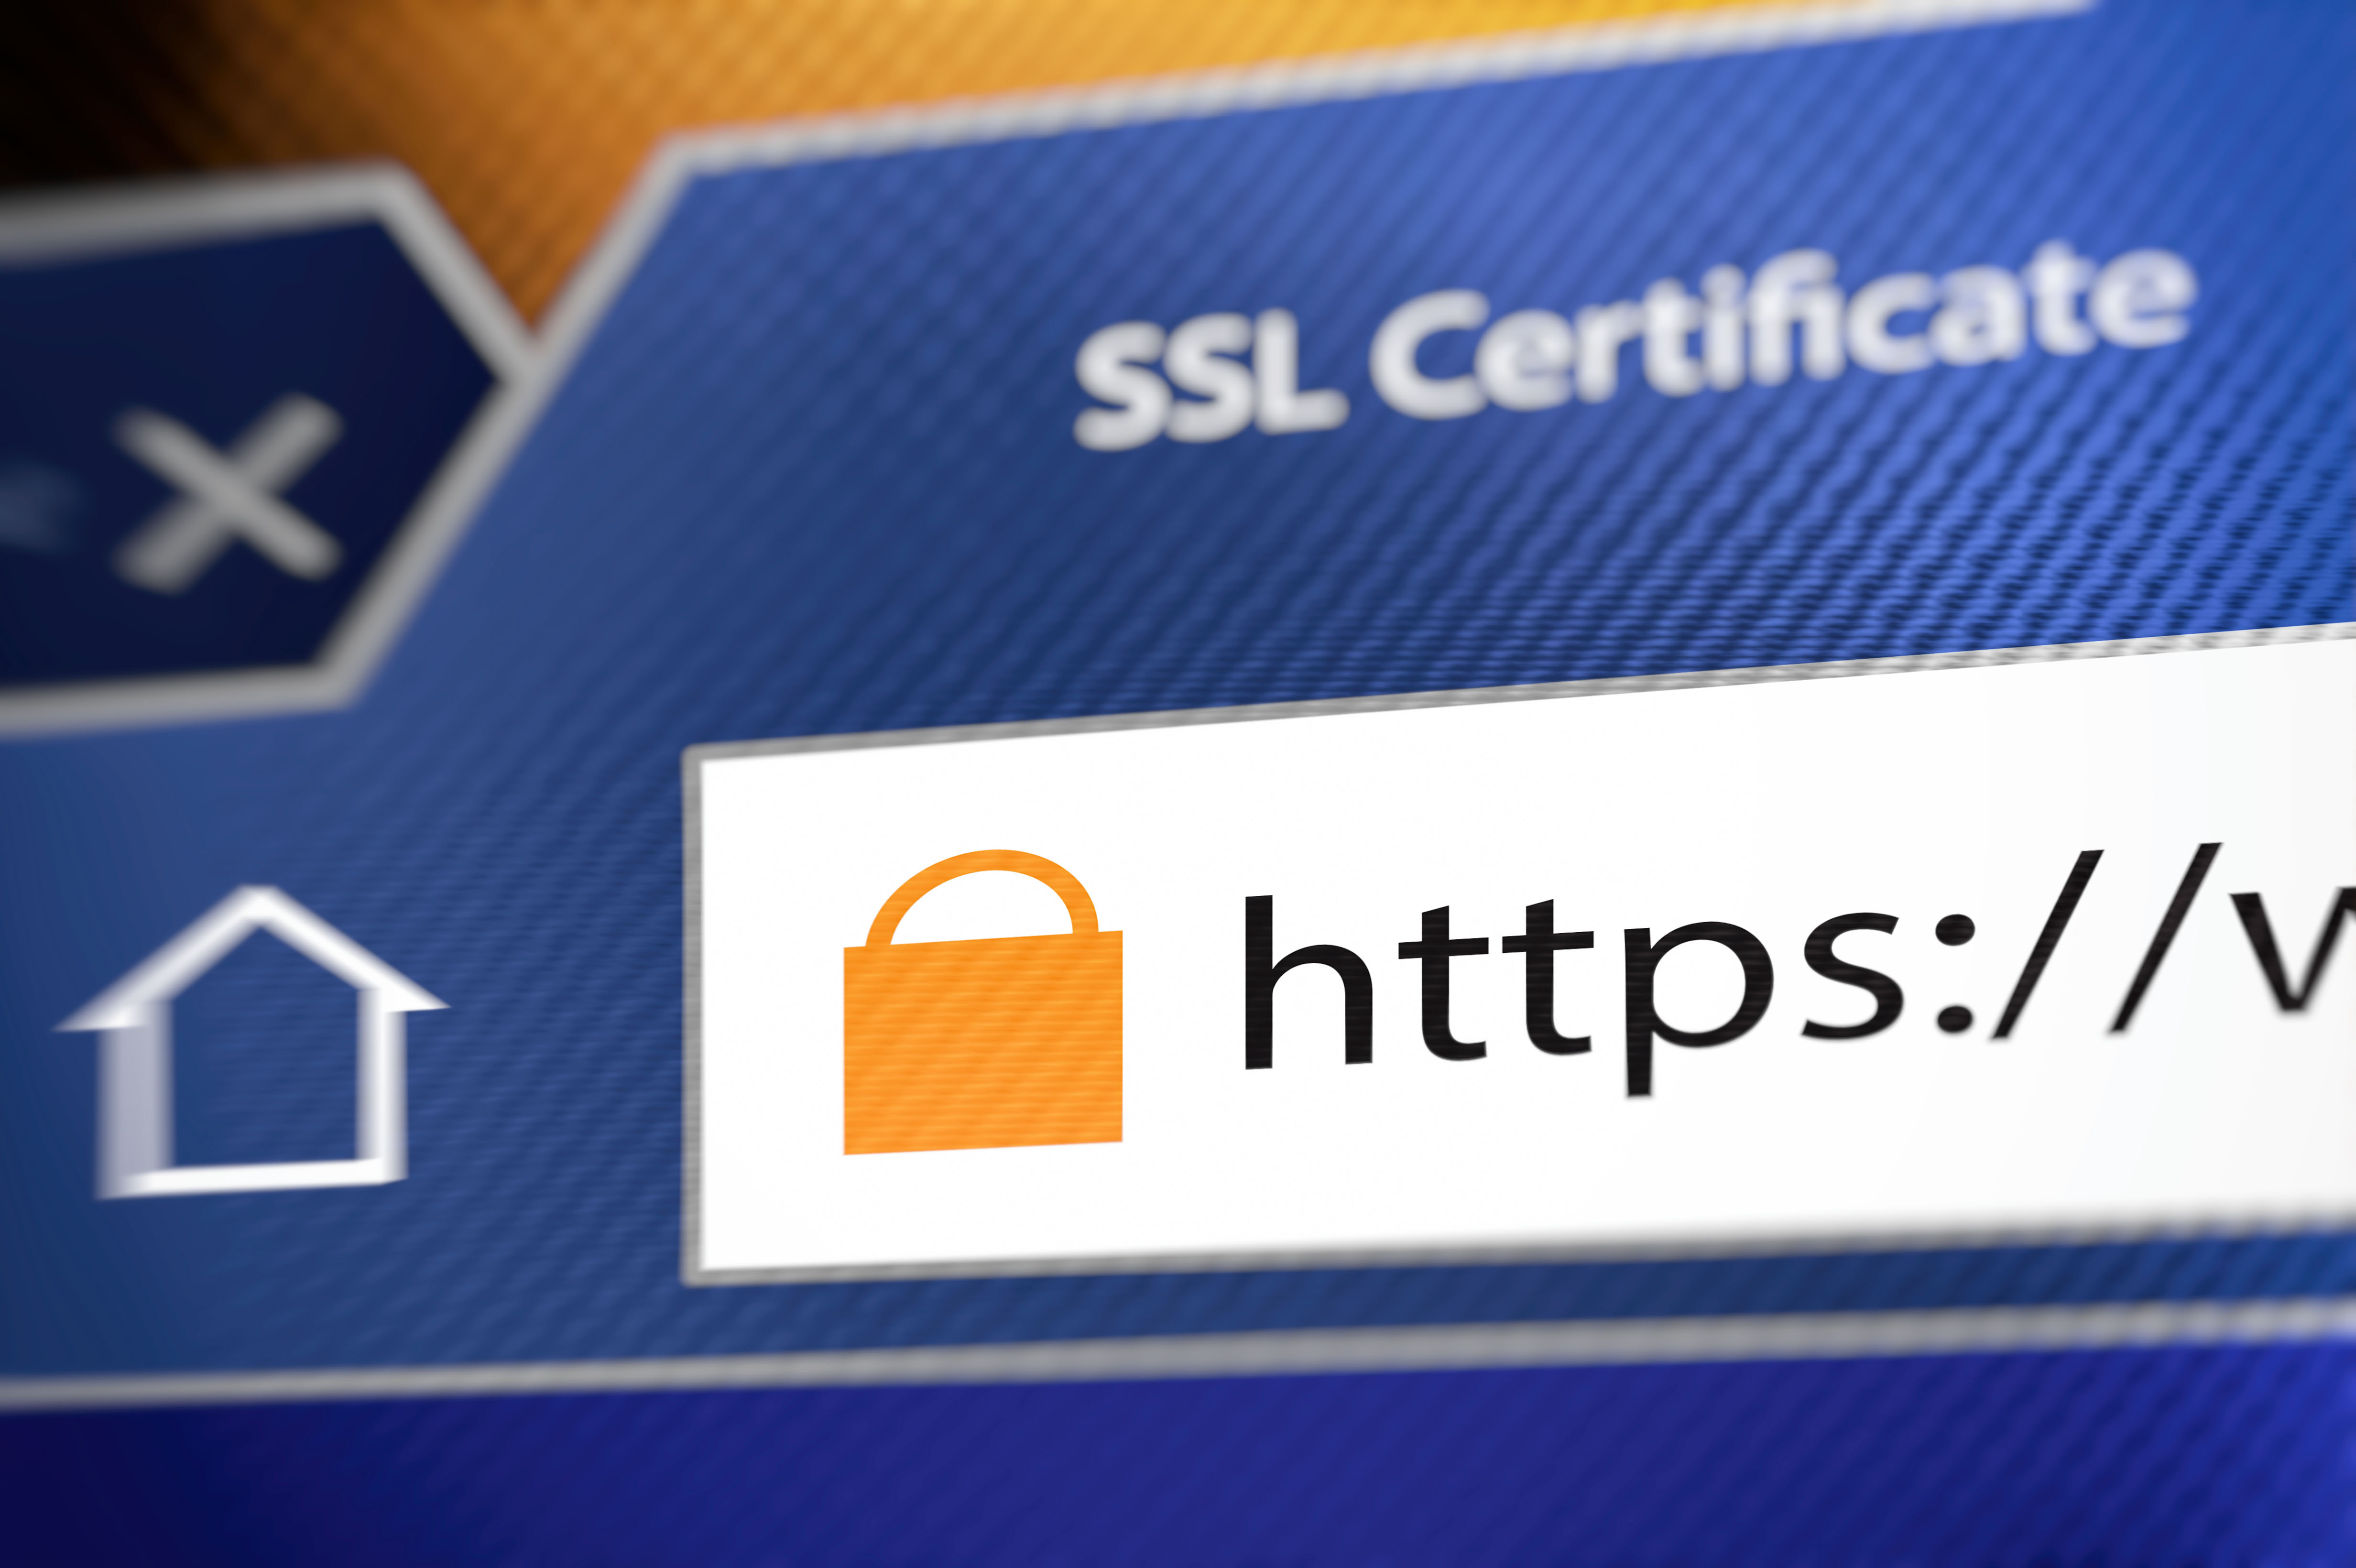 https ssl certificates